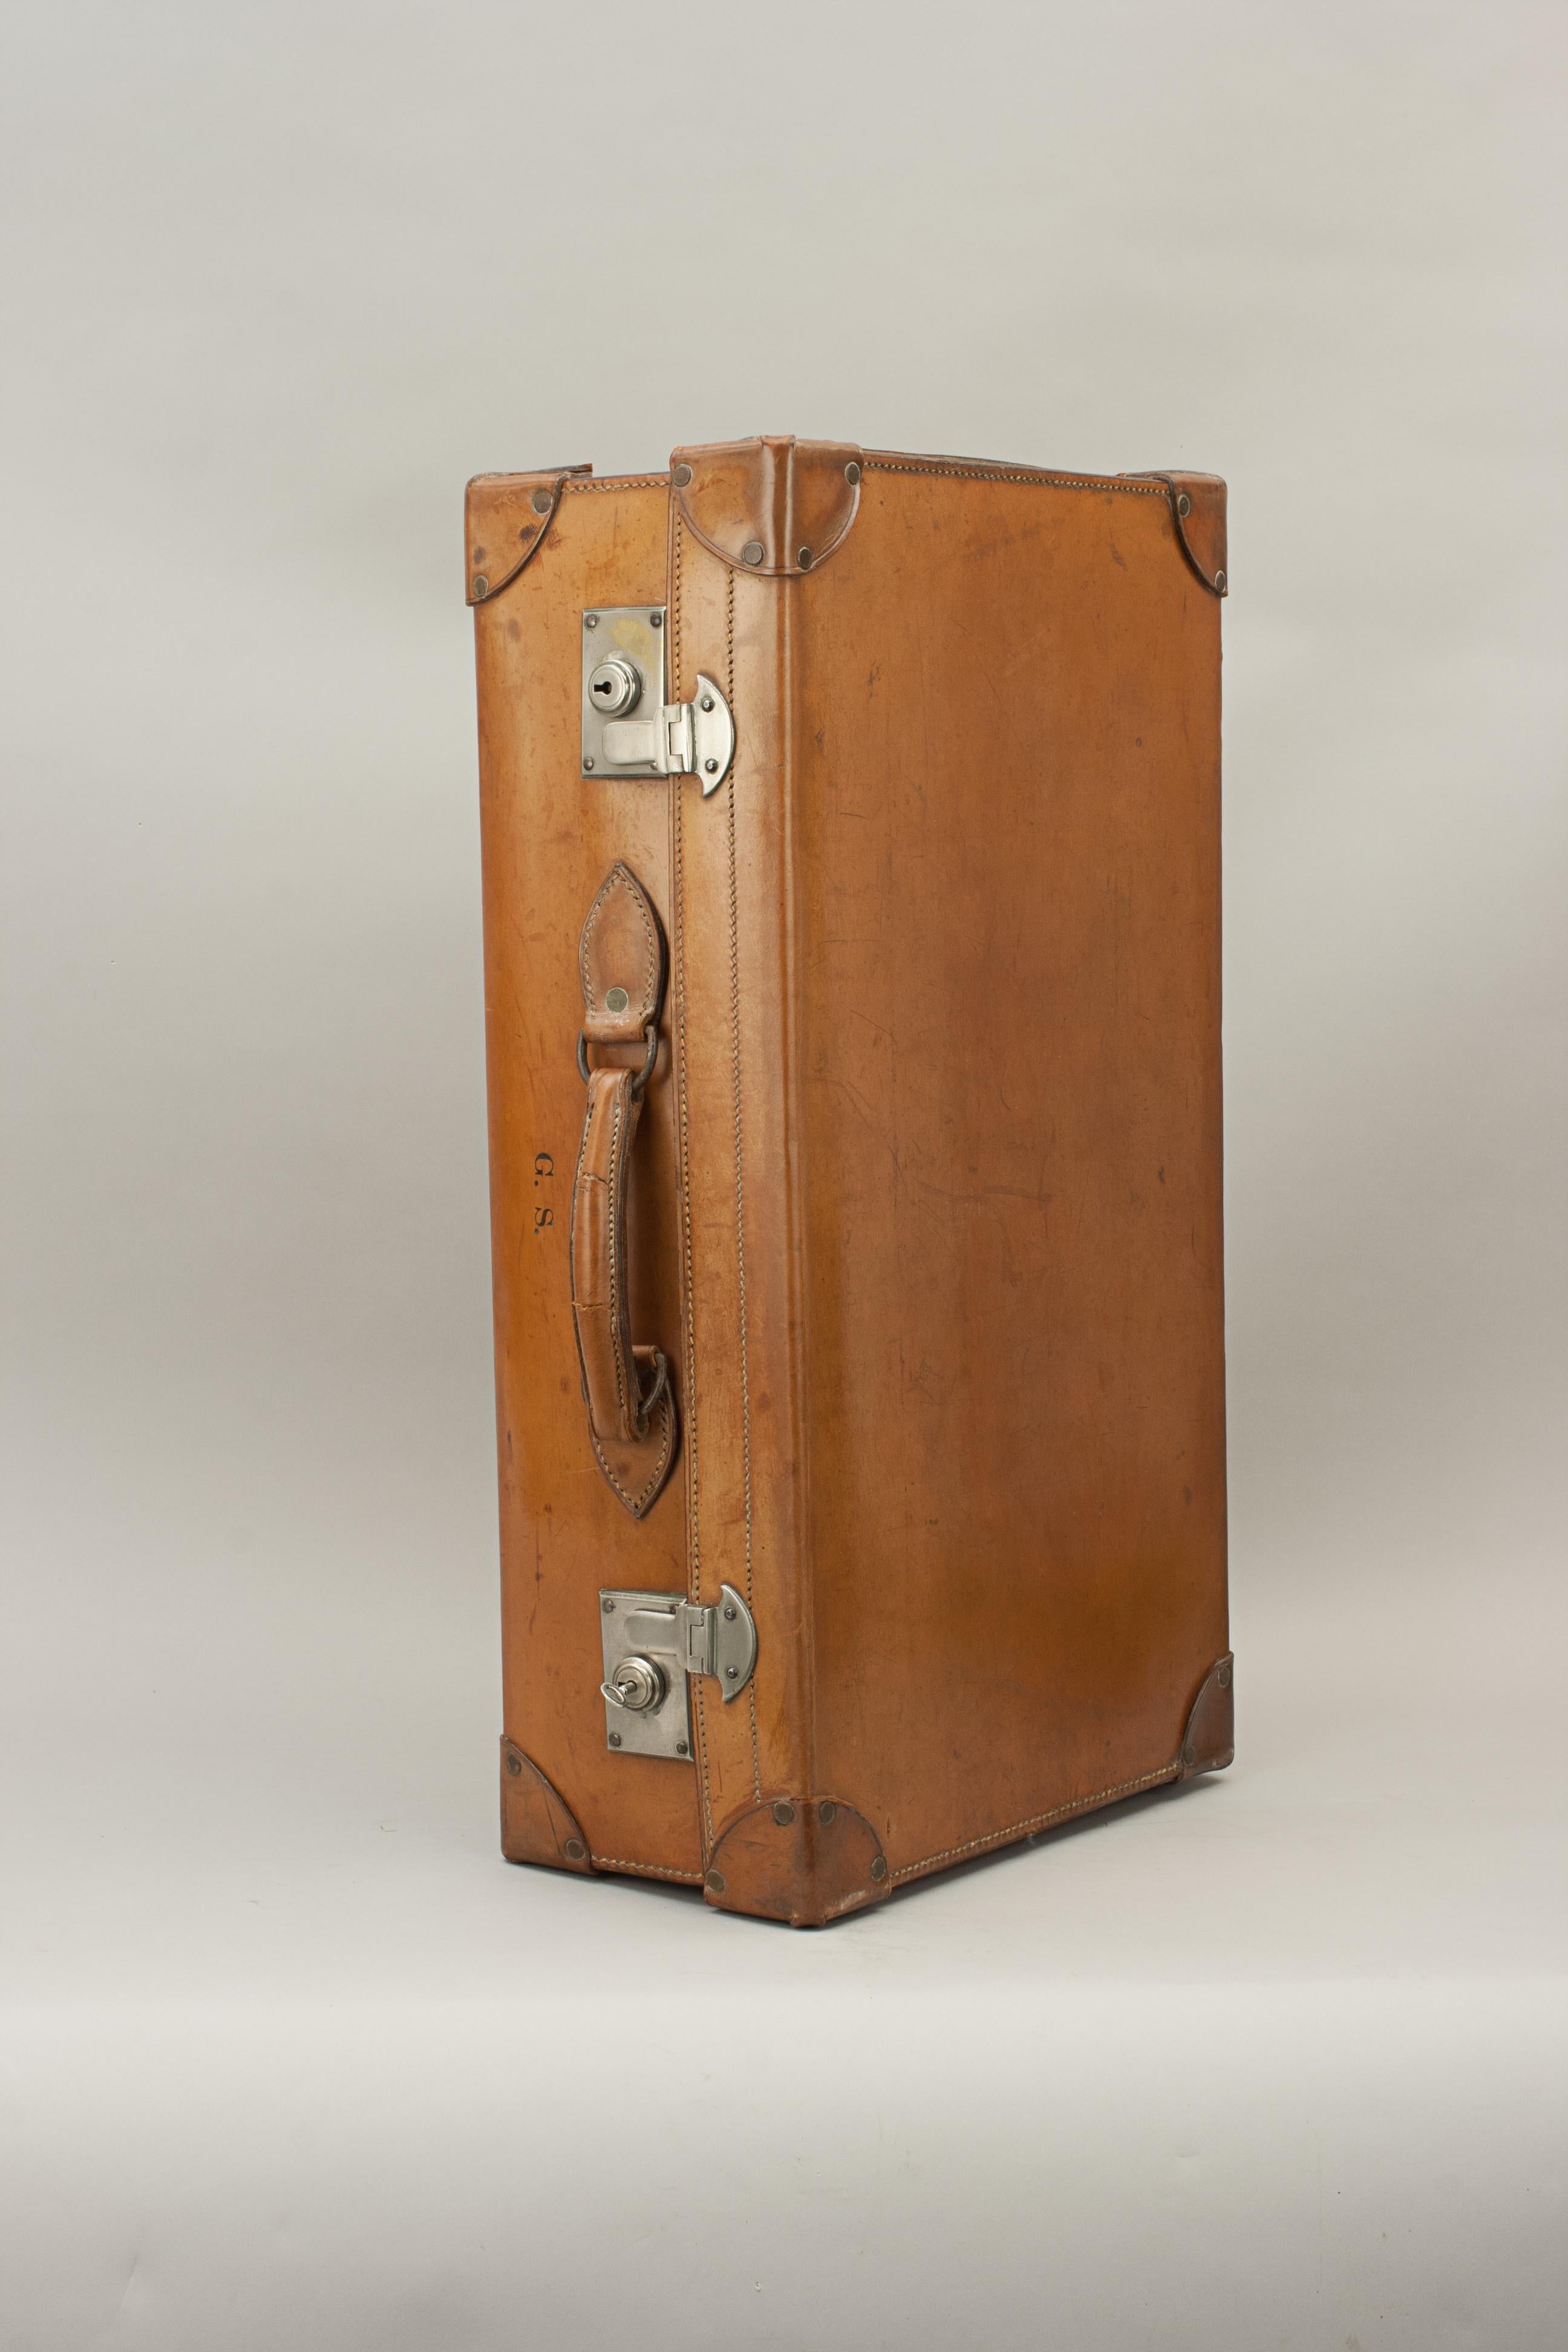 British Antique Leather Suitcase, Travelling Luggage or Motoring Case